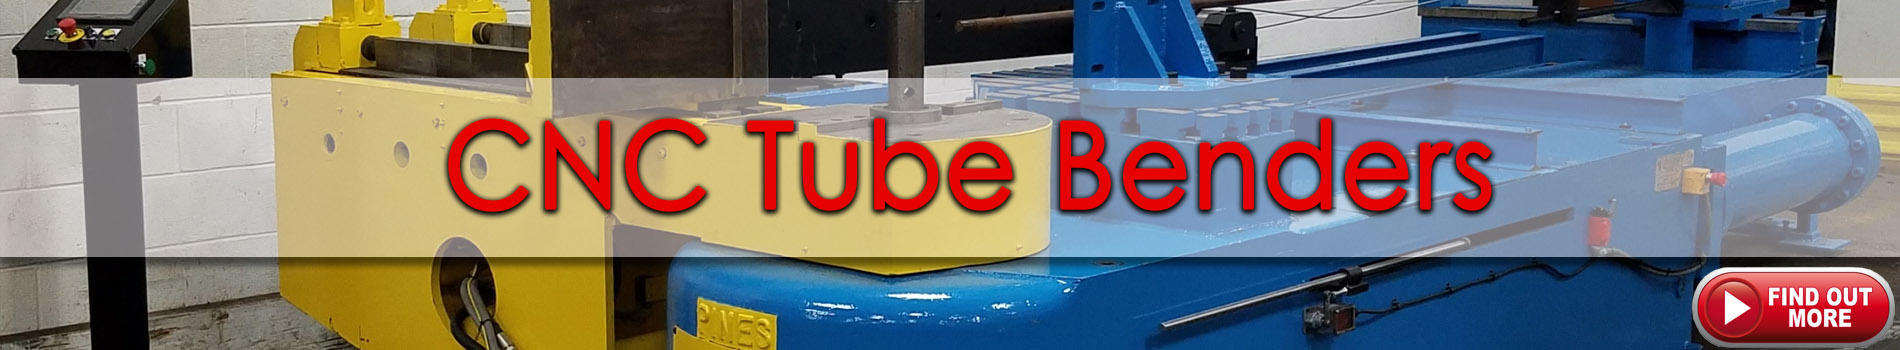 CNC Tube bender 2019 B